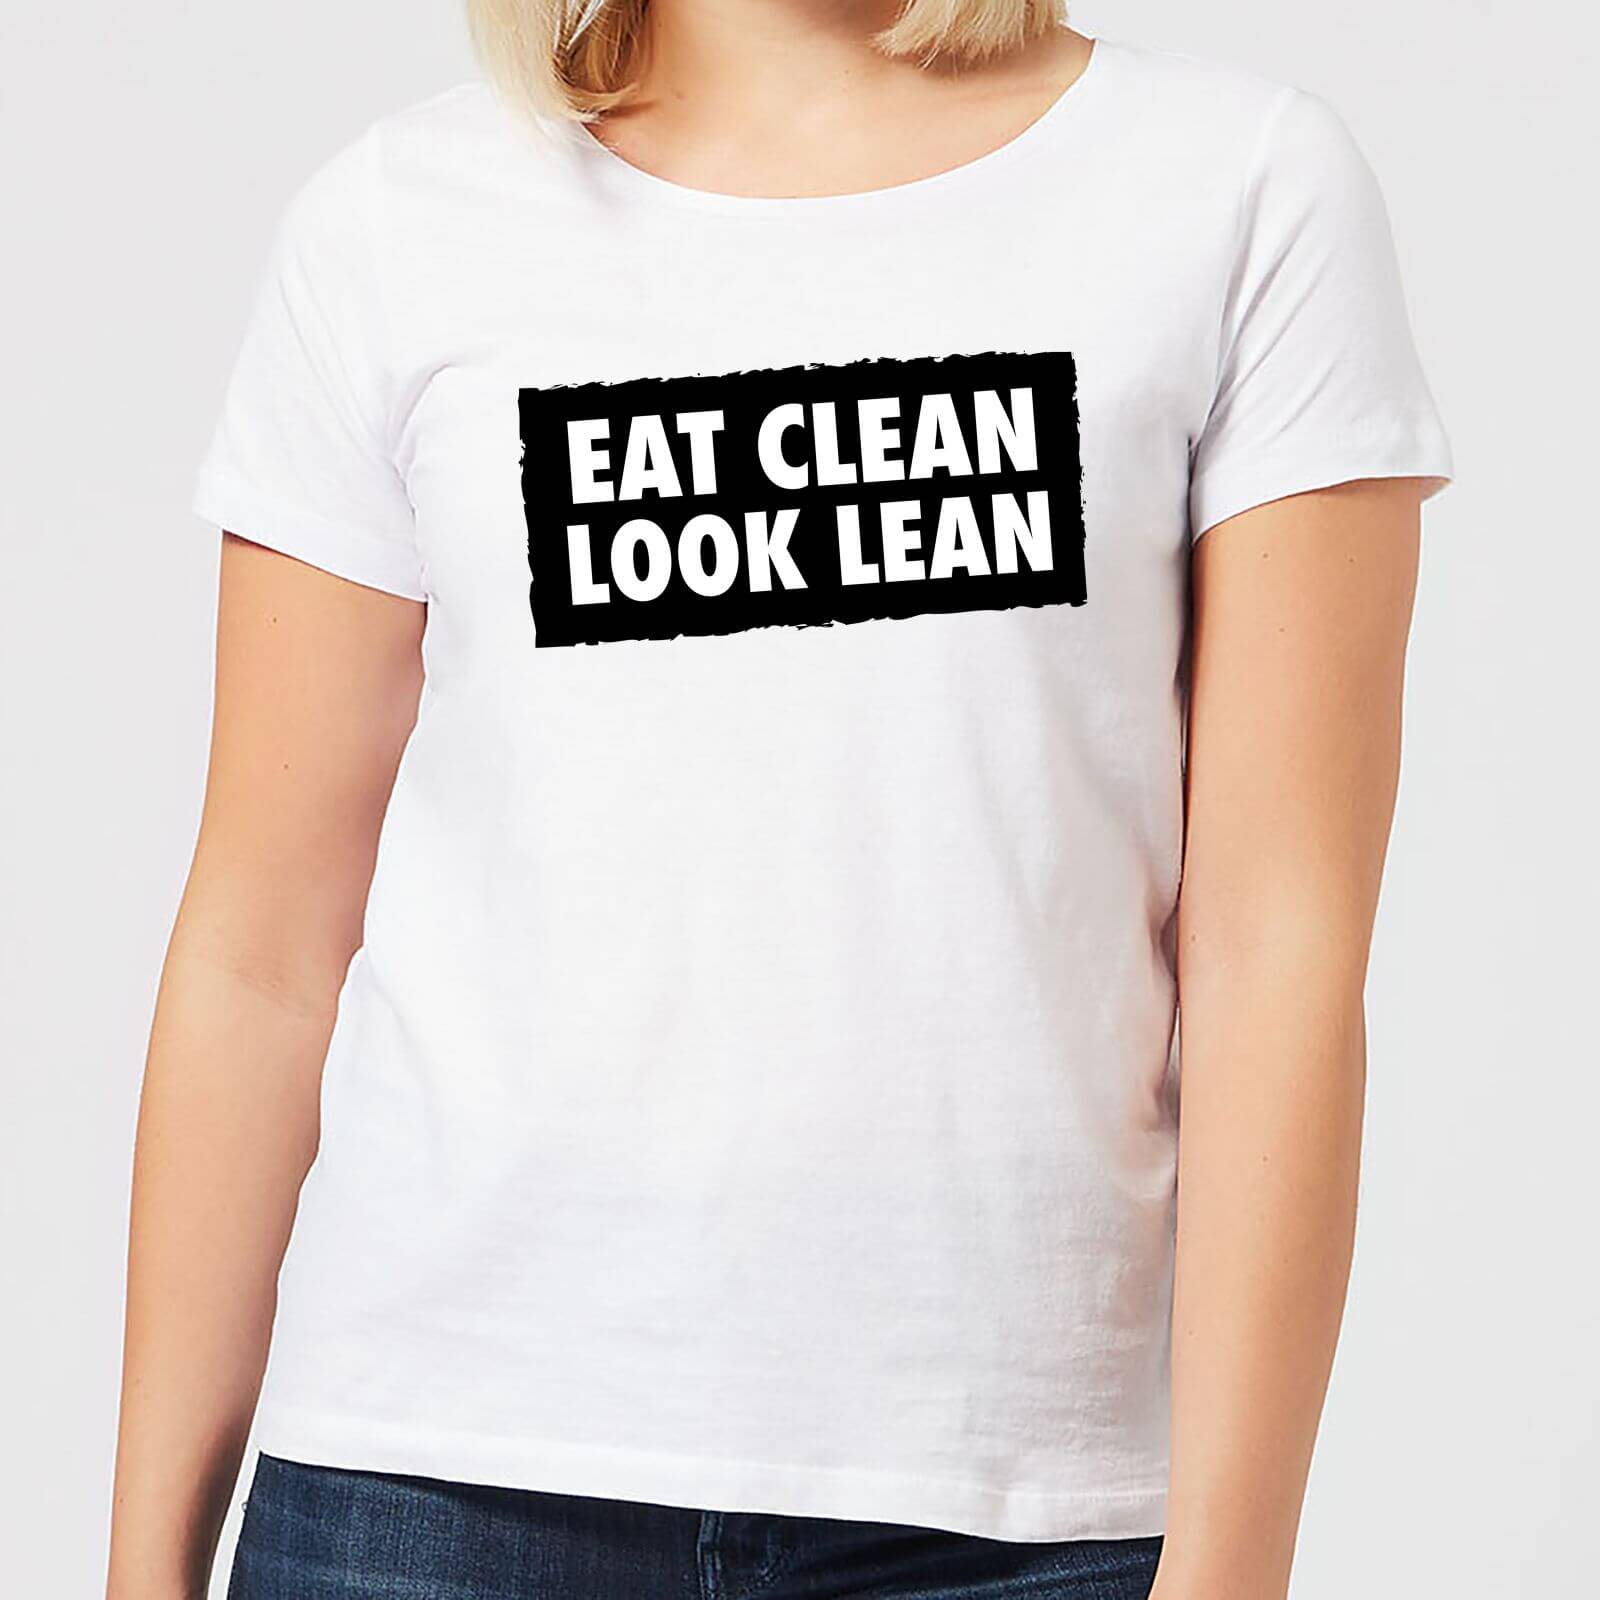 Eat Clean Look Lean Women's T-Shirt - White - L - White